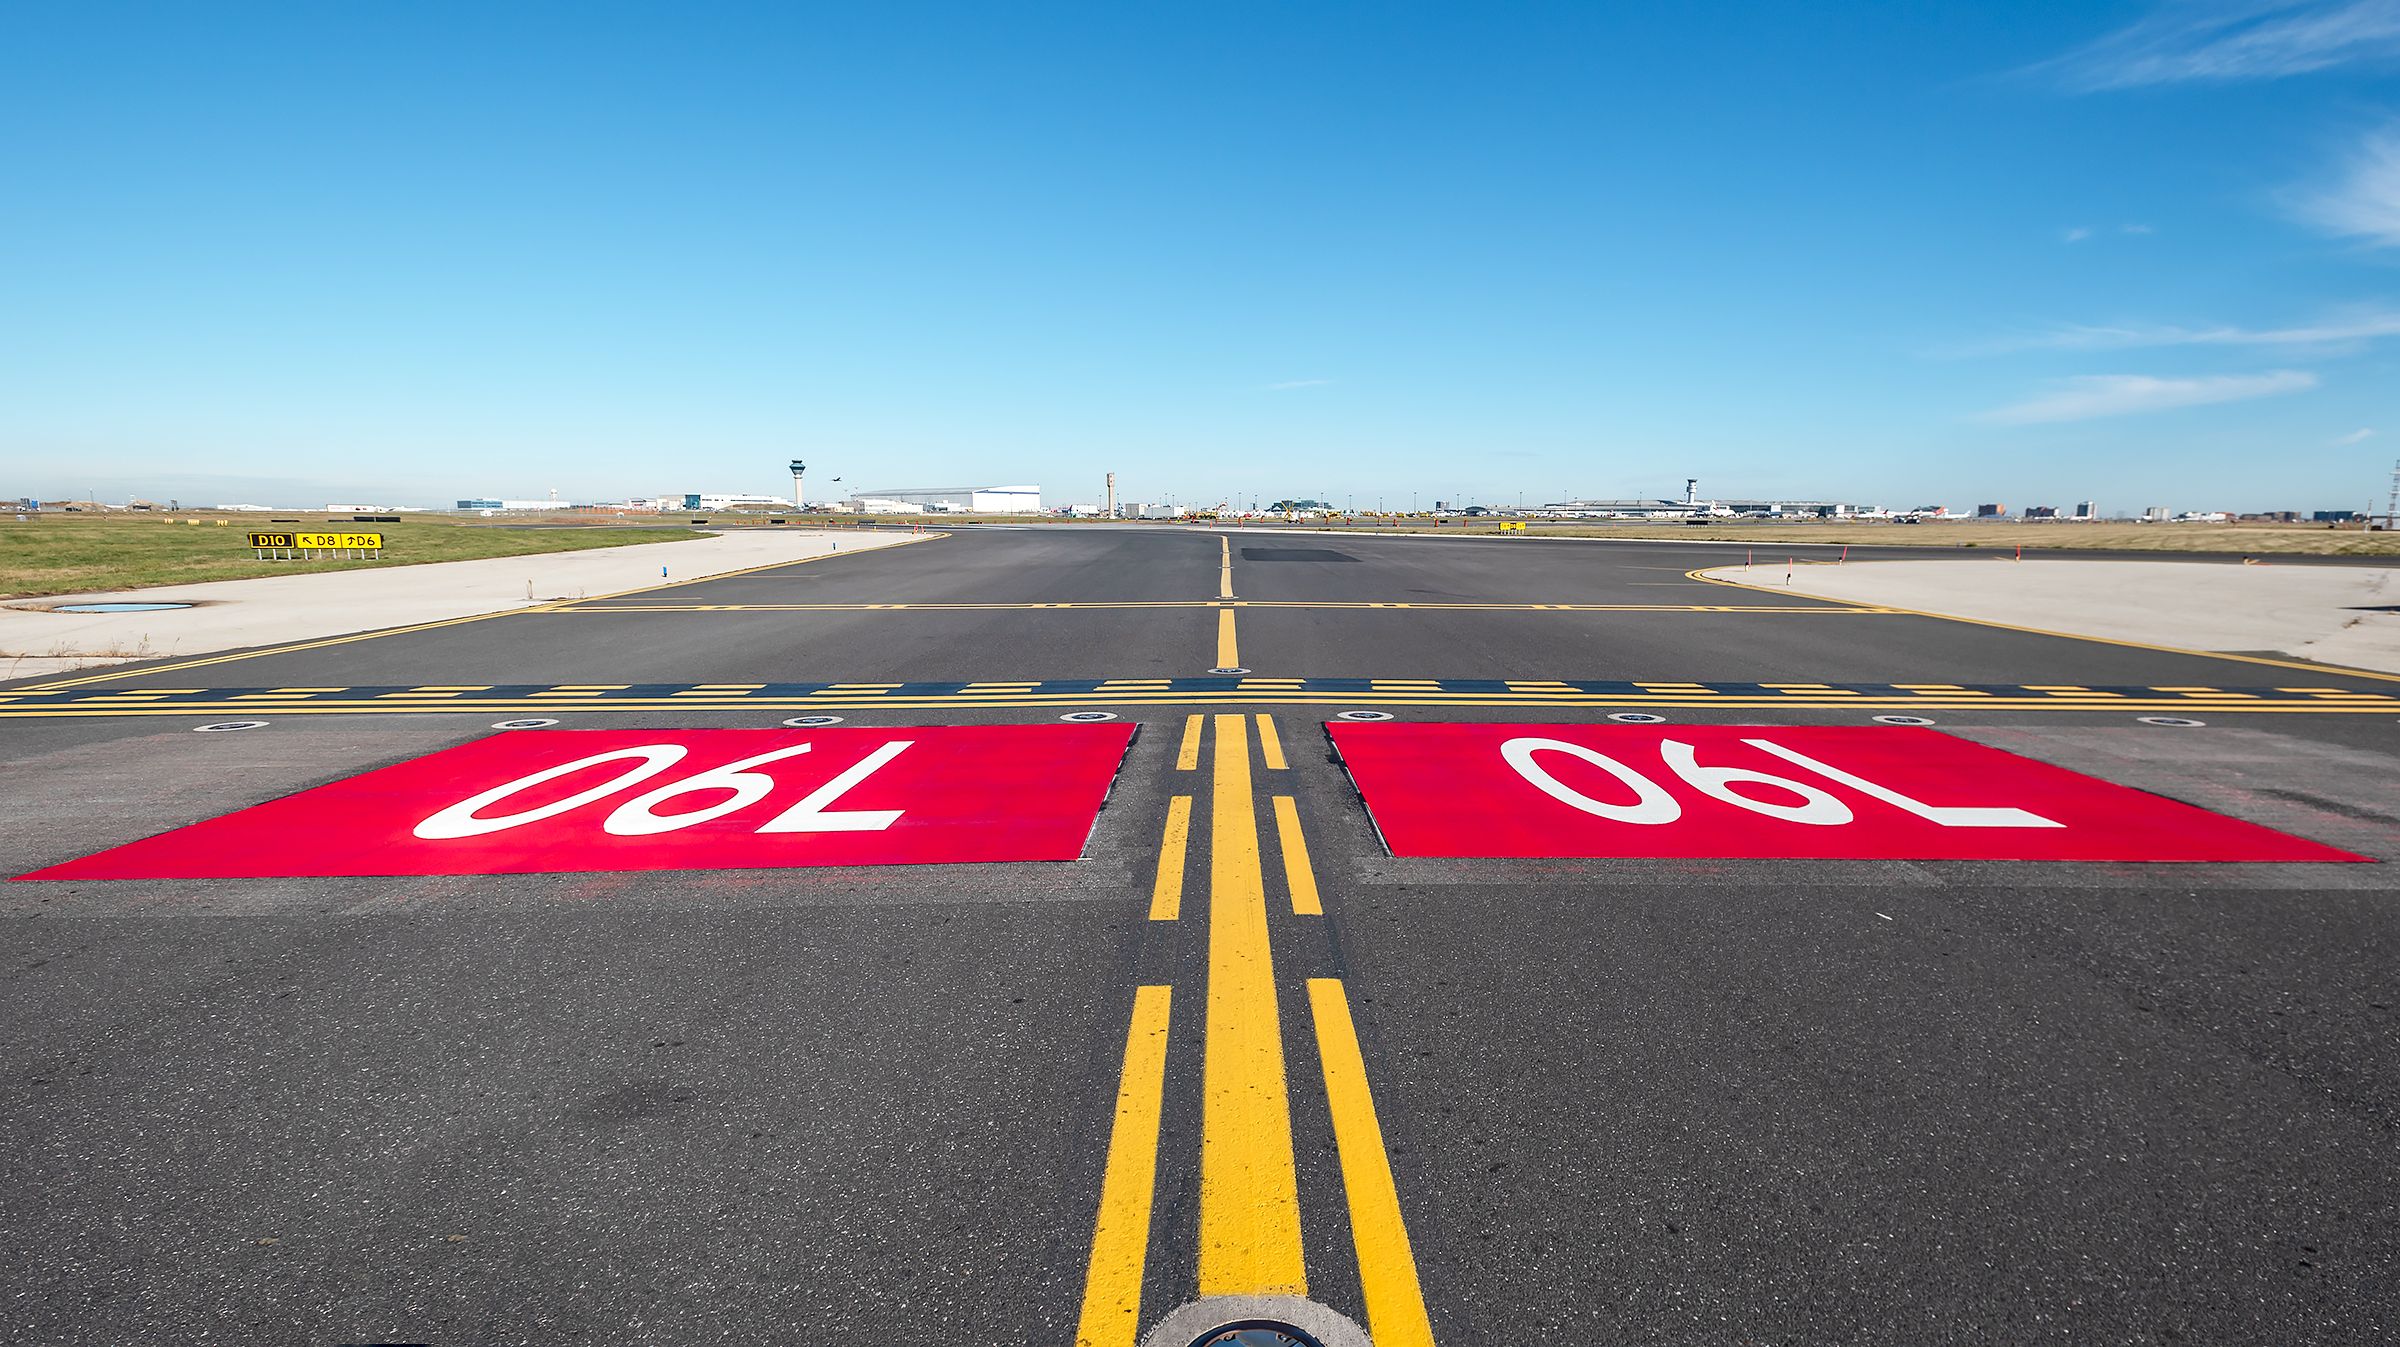 toronto pearson new runway 06L/24R